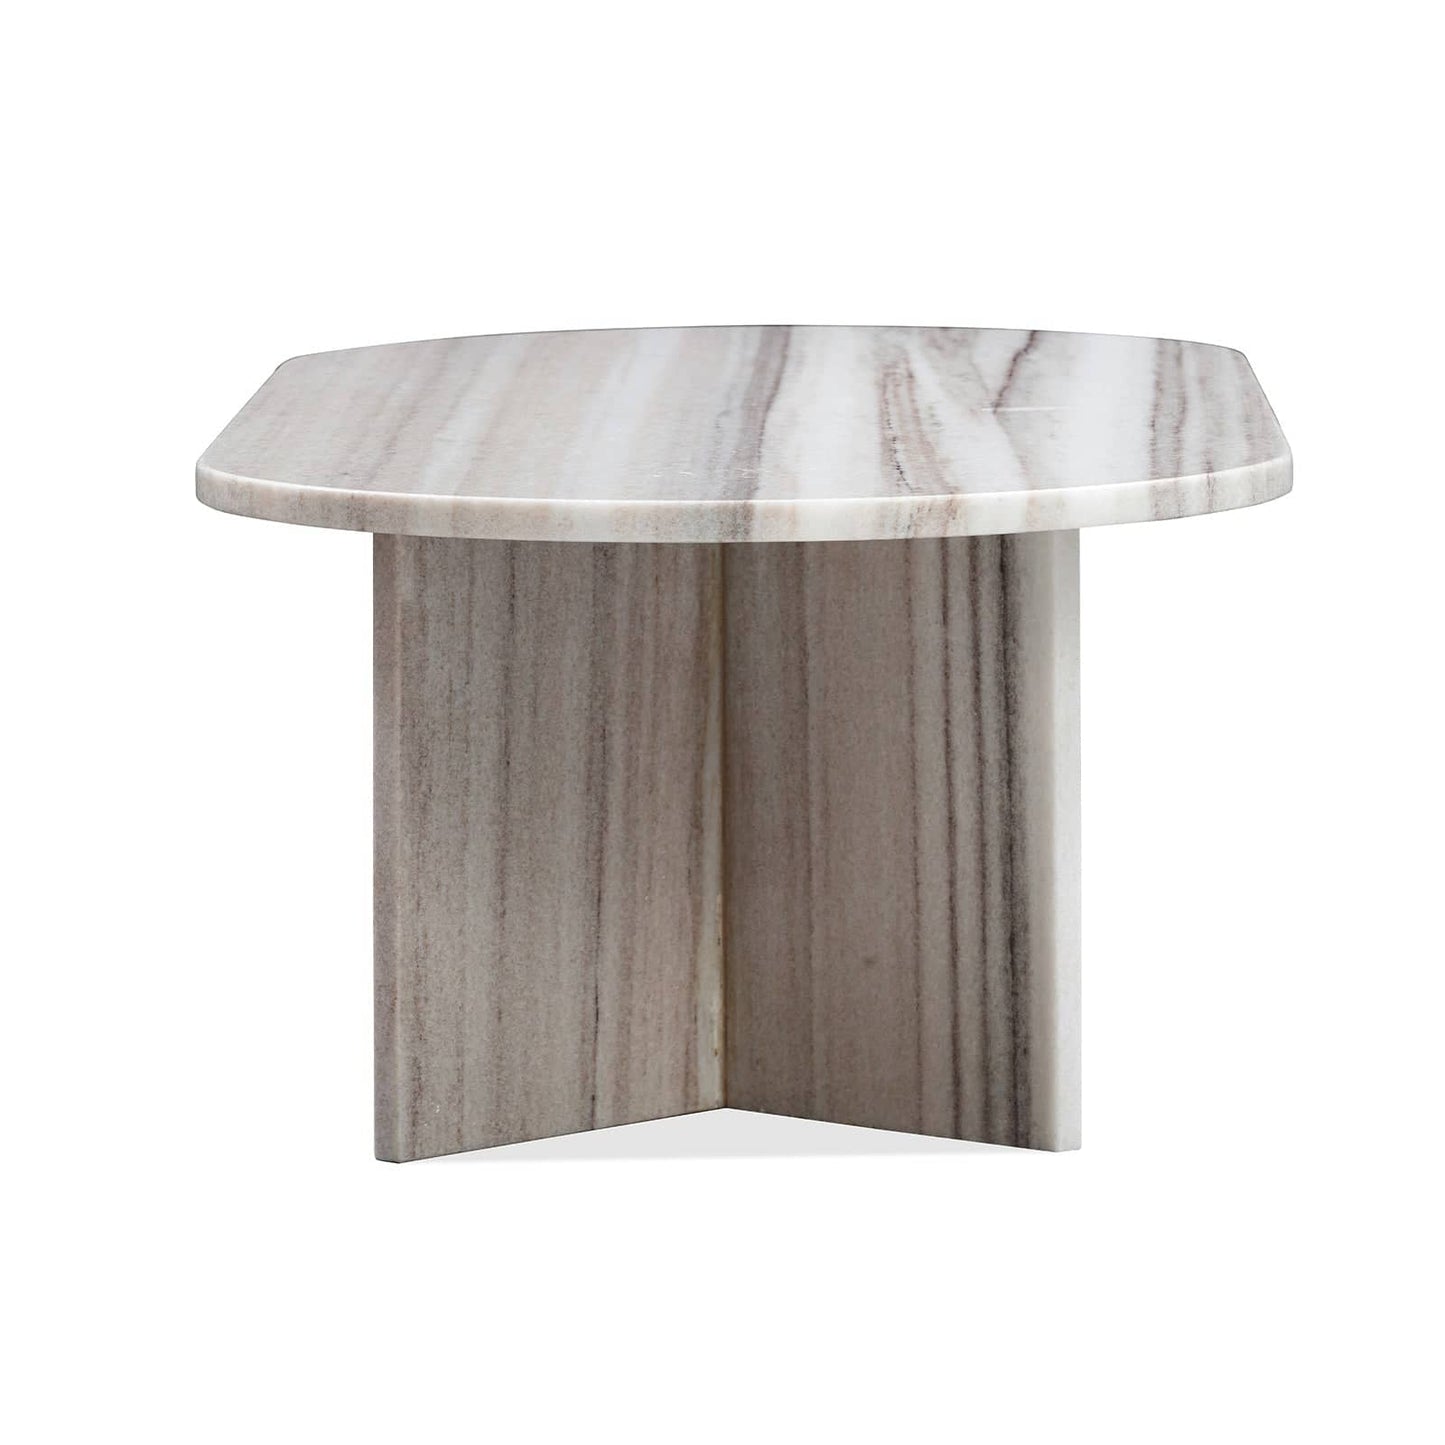 Edge Oval Coffee Table - Sand Granite